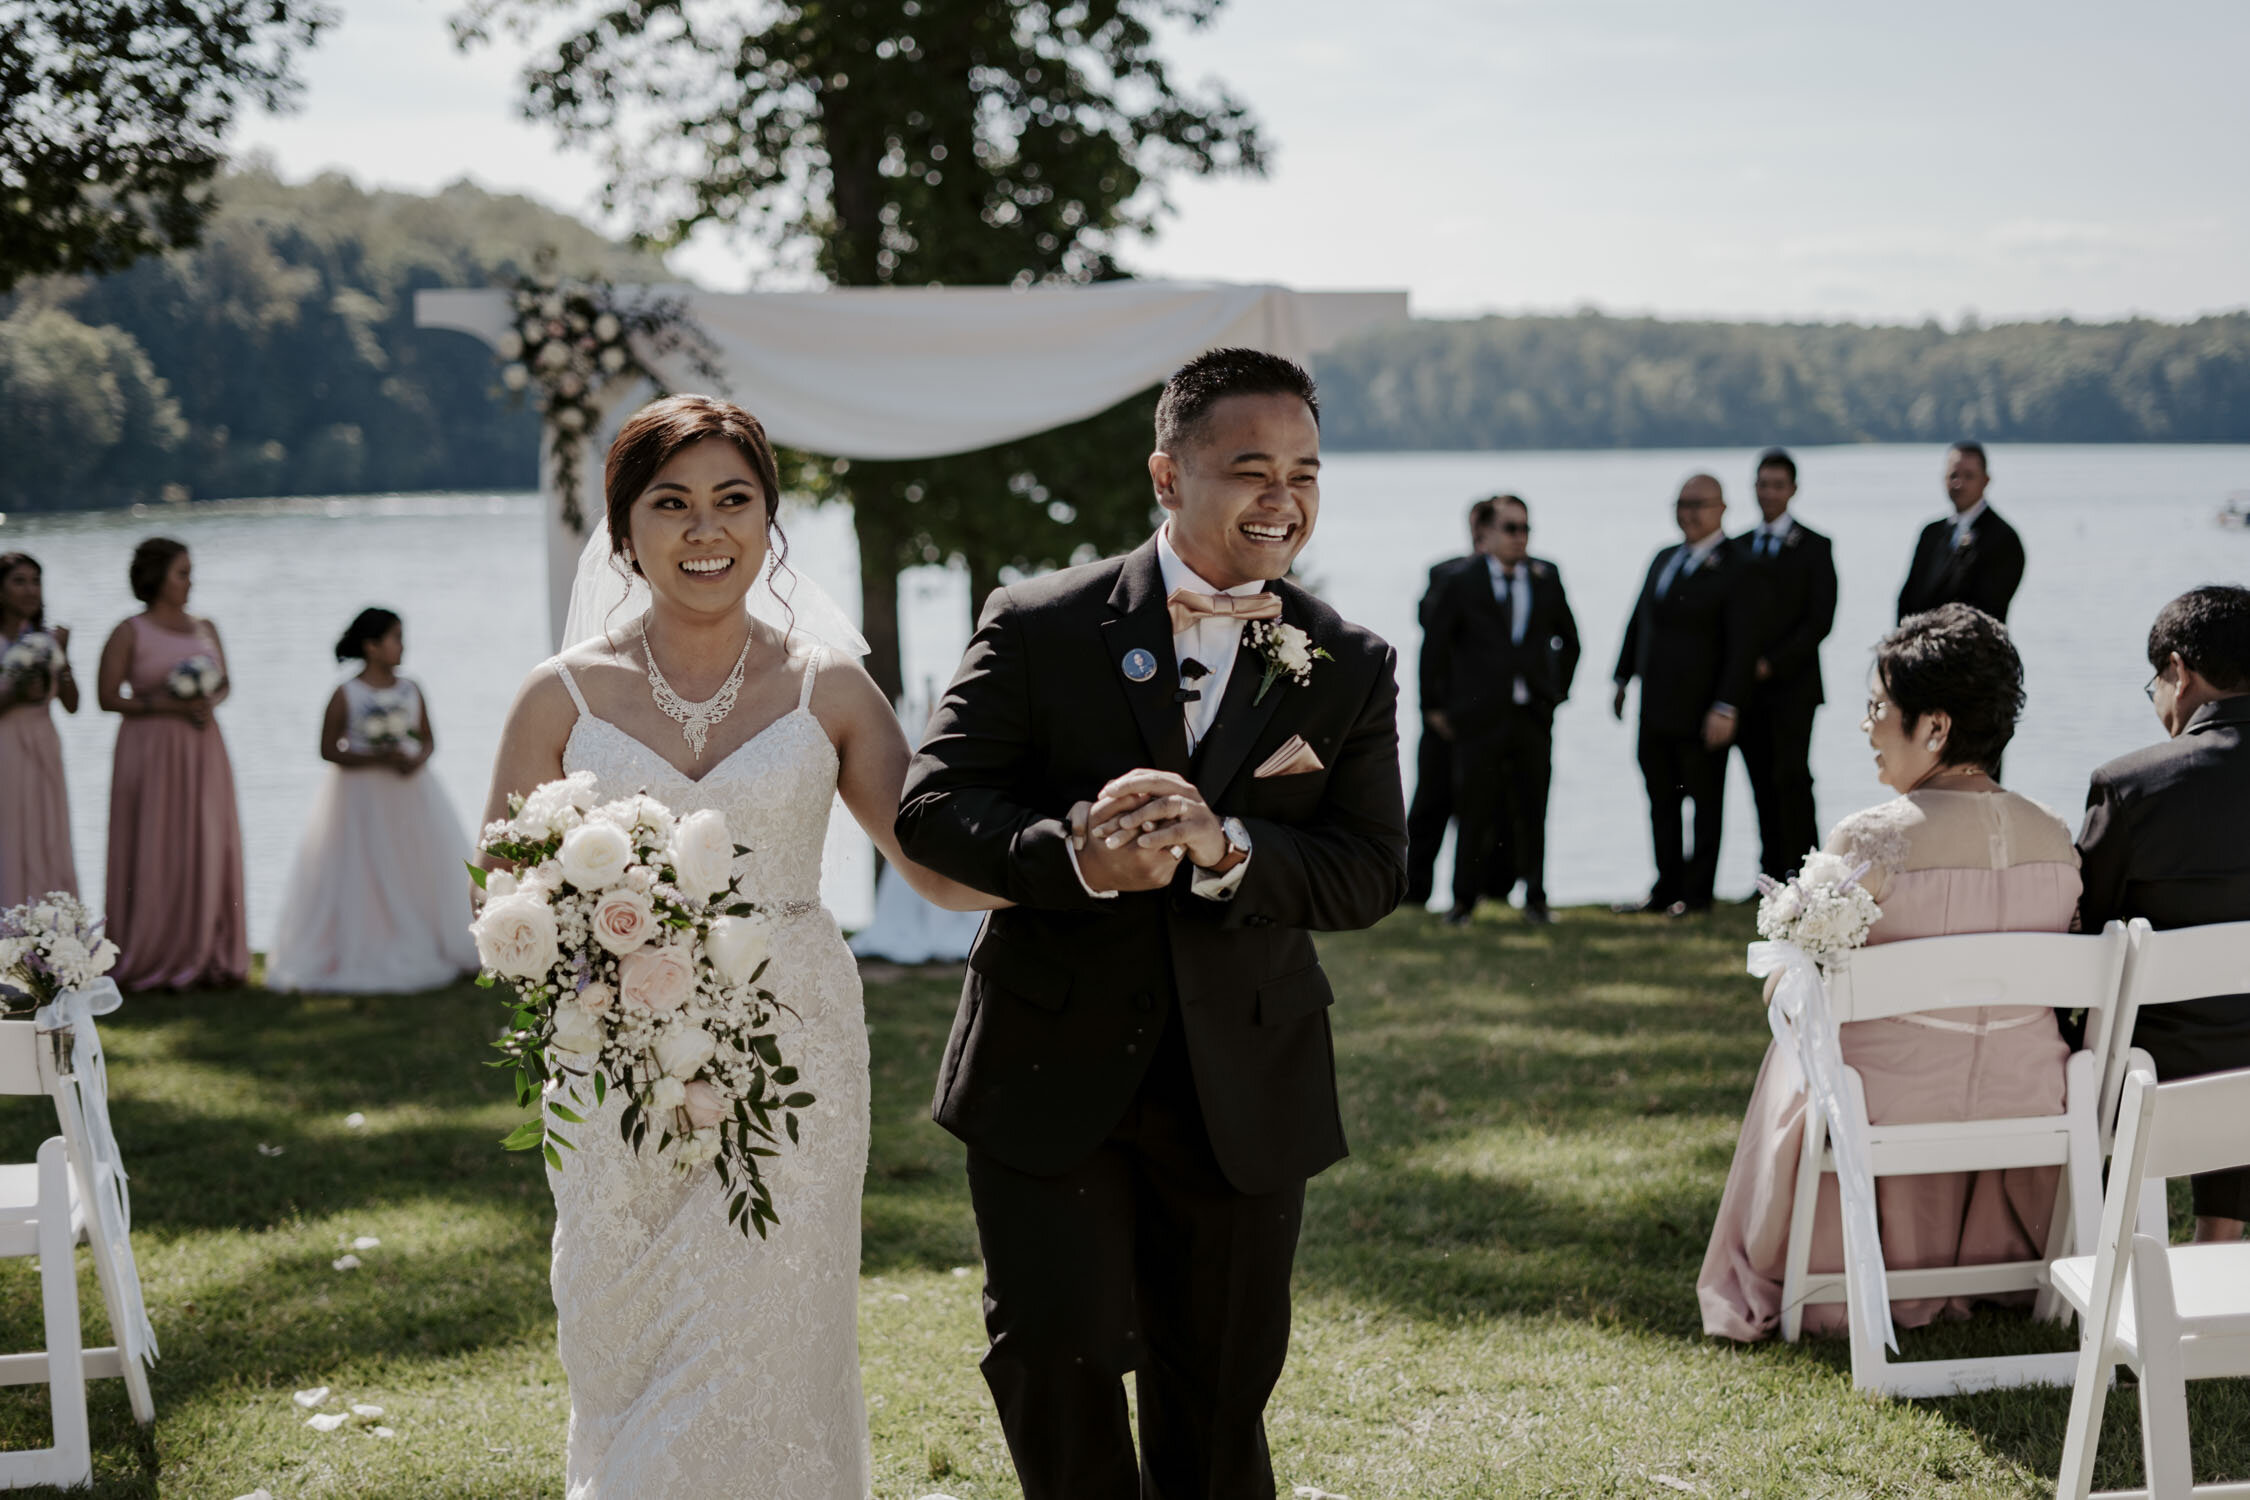 Greensboro Winston-Salem, NC Wedding Photography at Belews Lake | Bella Collina Mansion Ceremony | Kayli LaFon Wedding Photographer